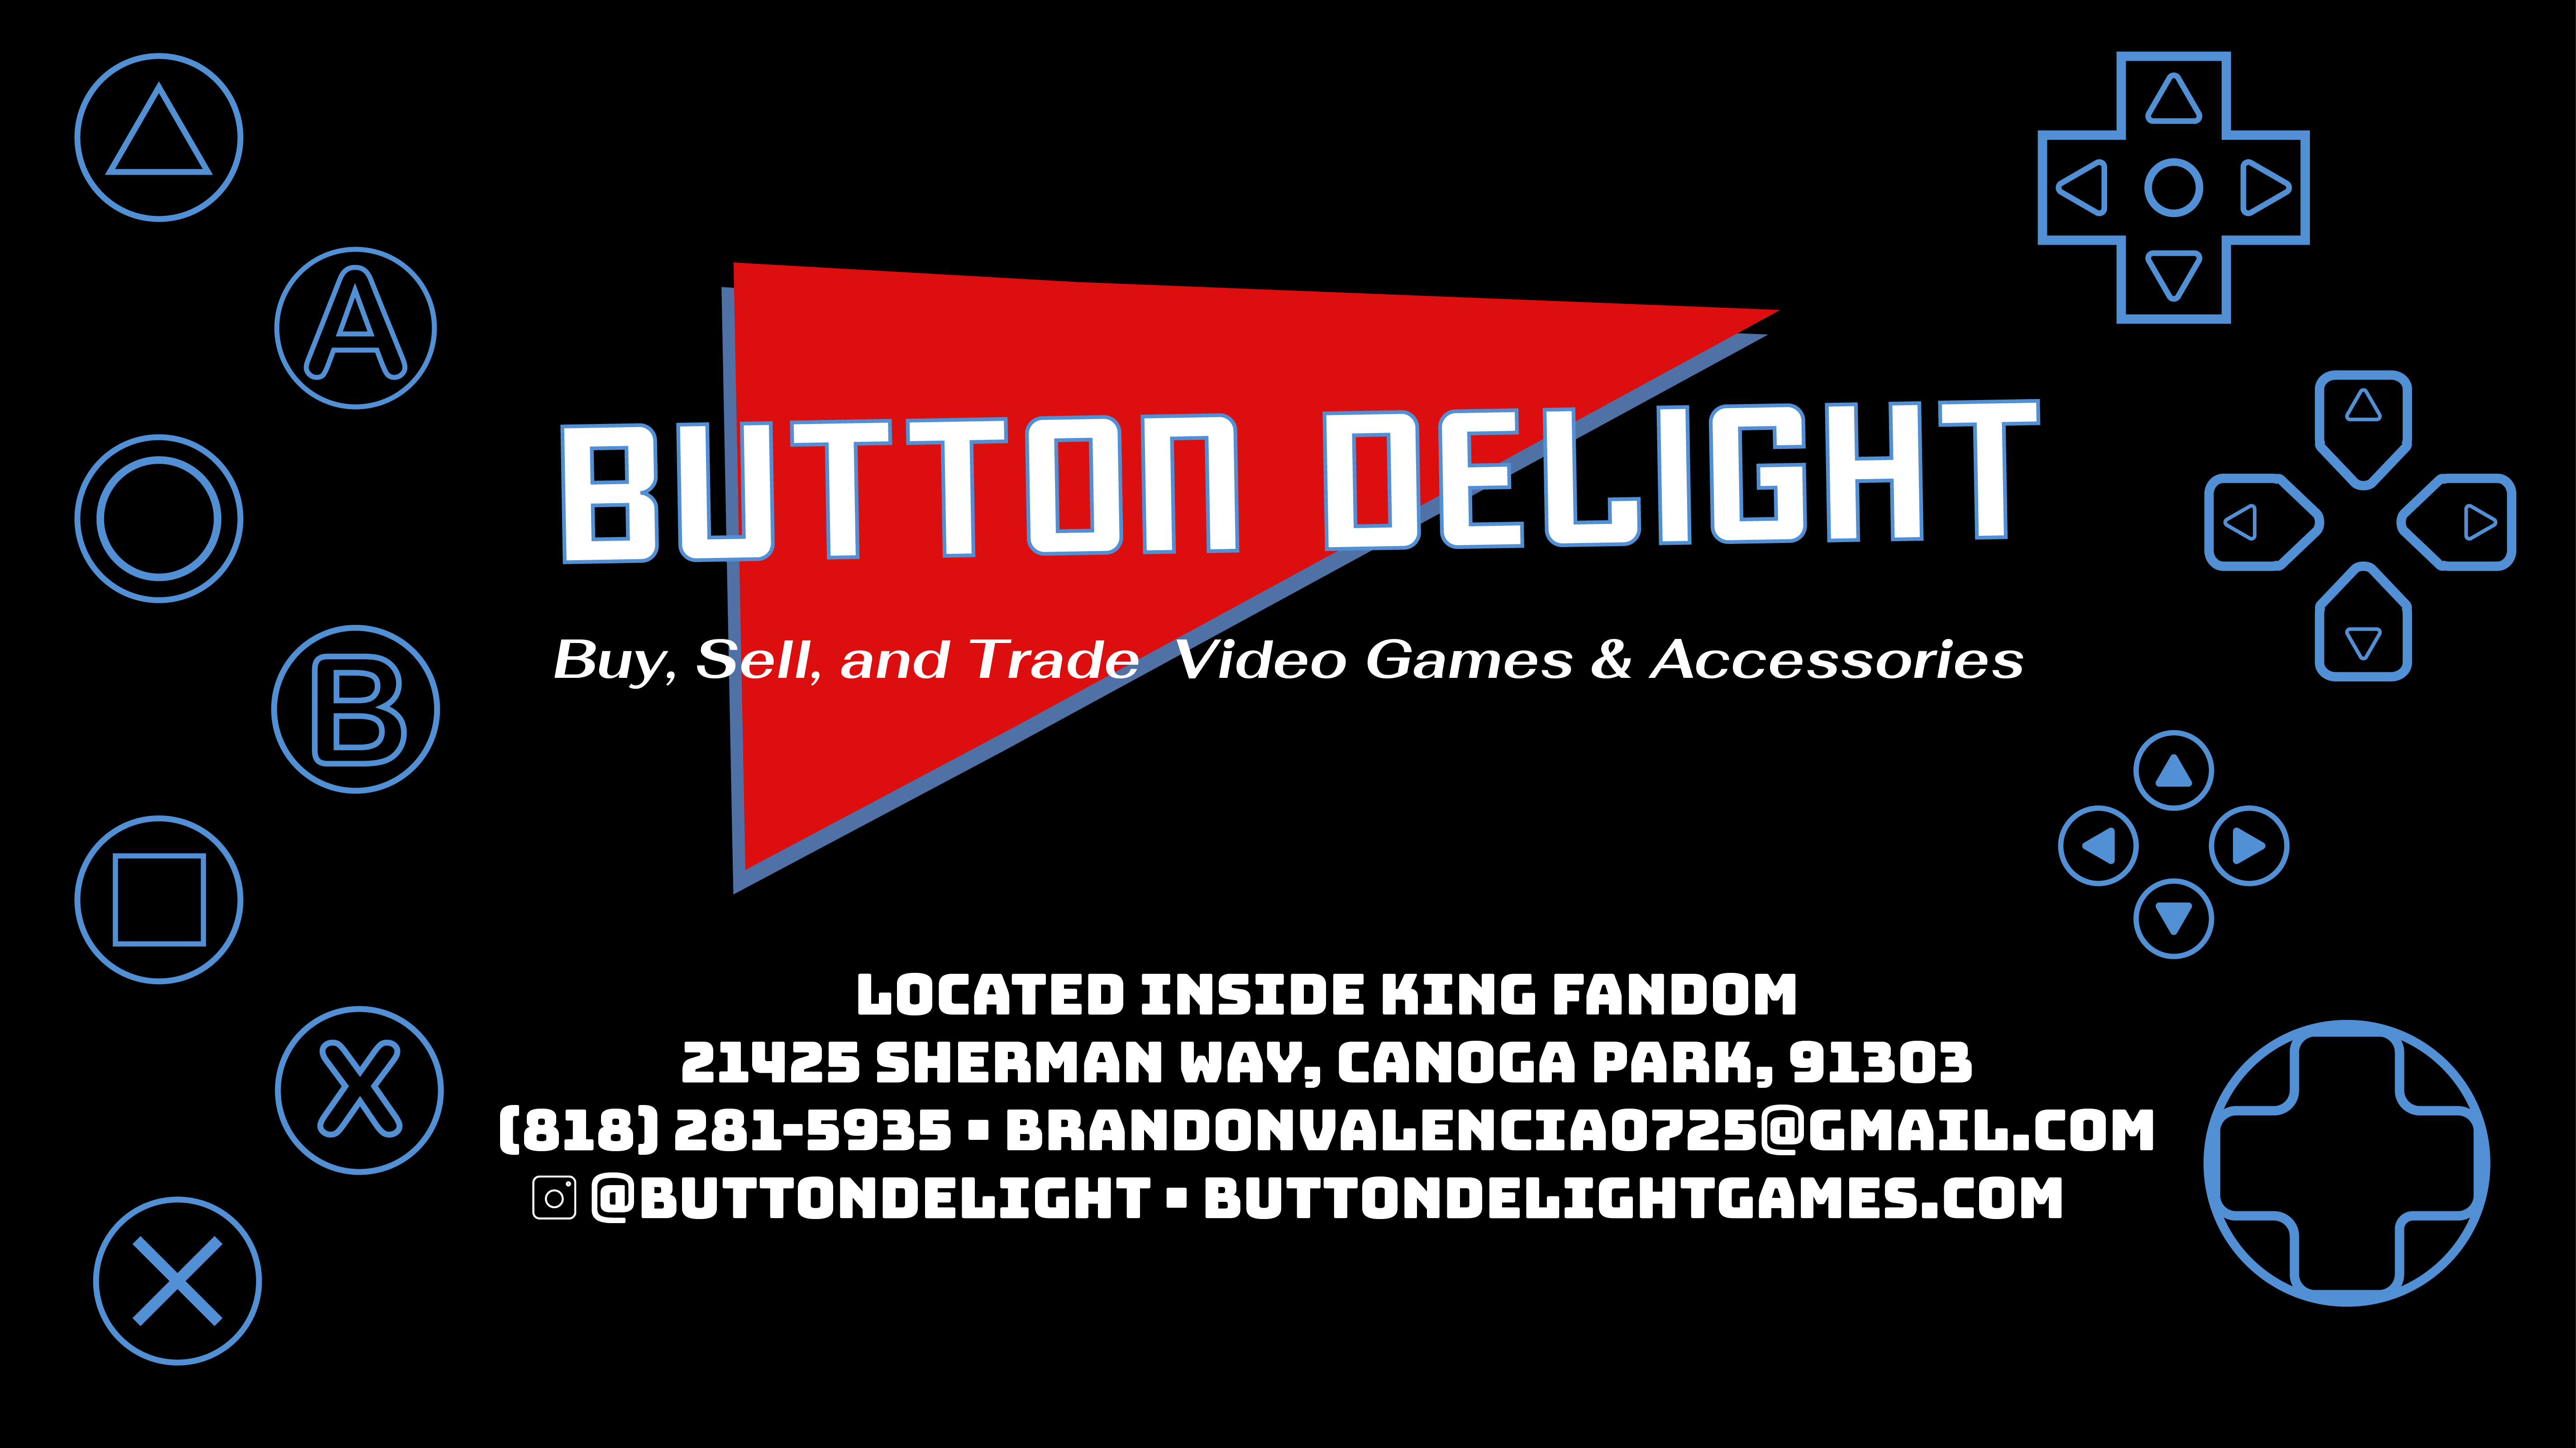 Button Delight Games